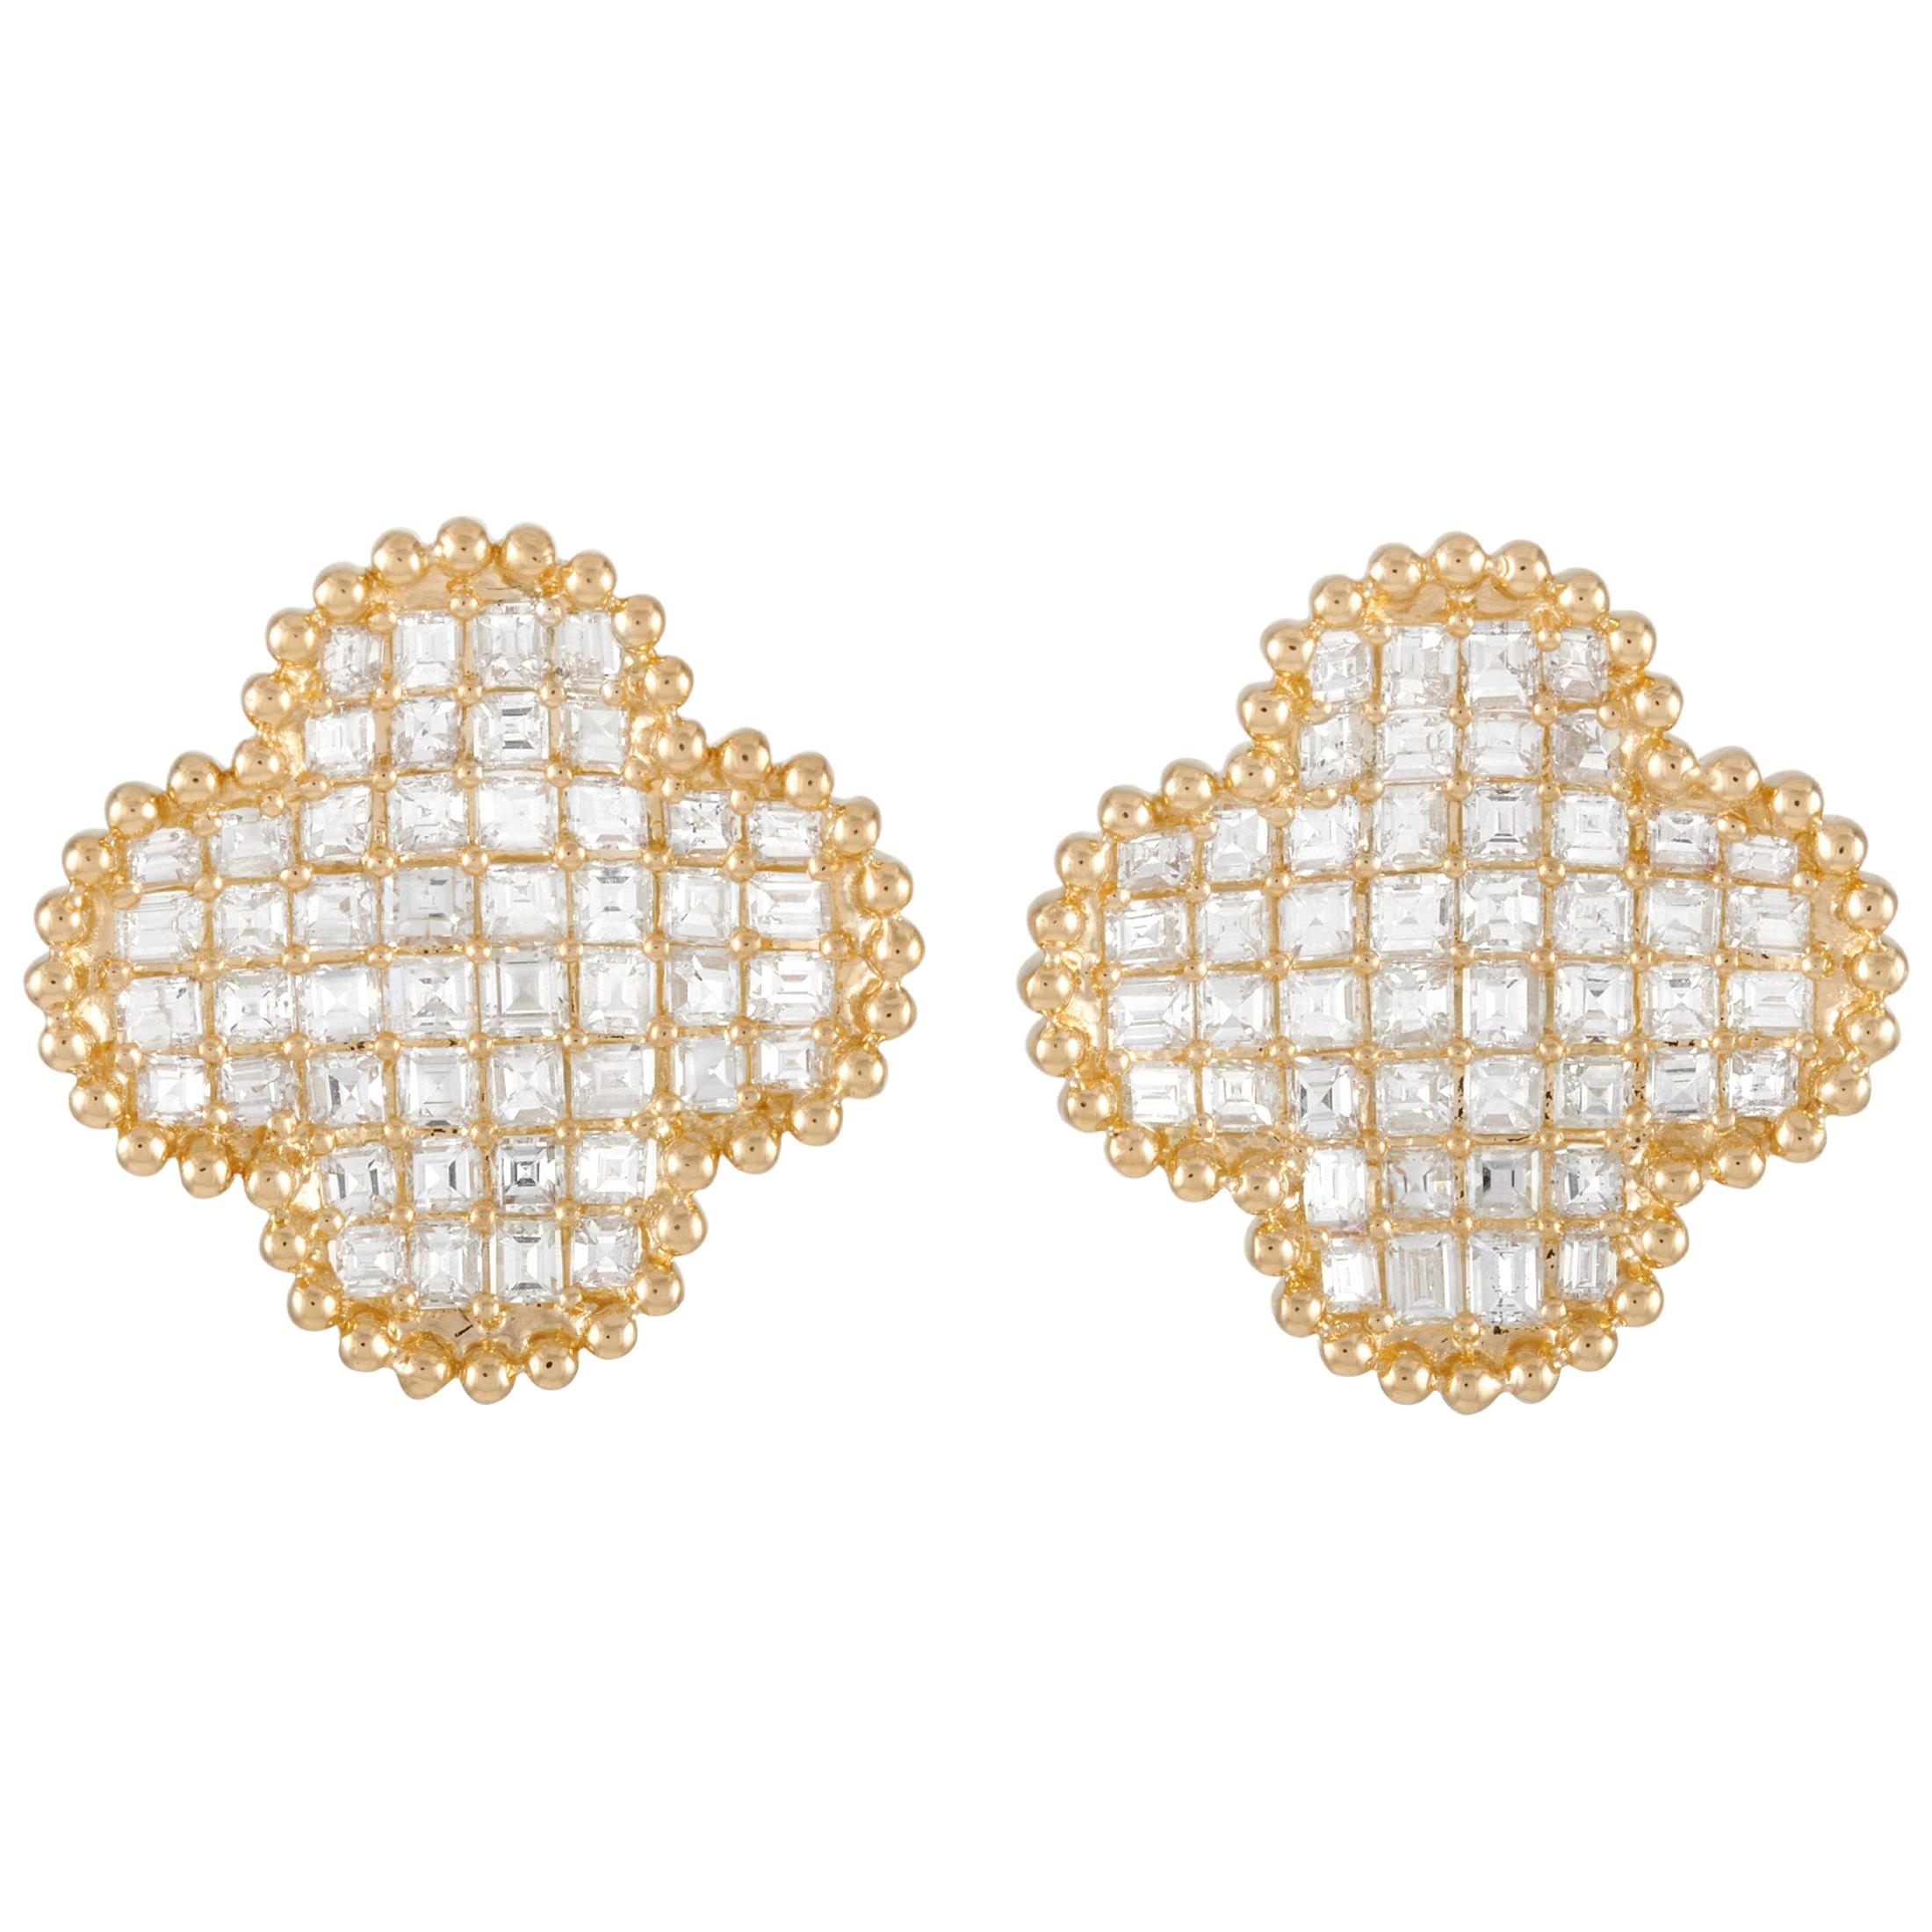 LB Exclusive 18 Karat Yellow Gold 3.34 Carat Diamond Quatrefoil Earrings